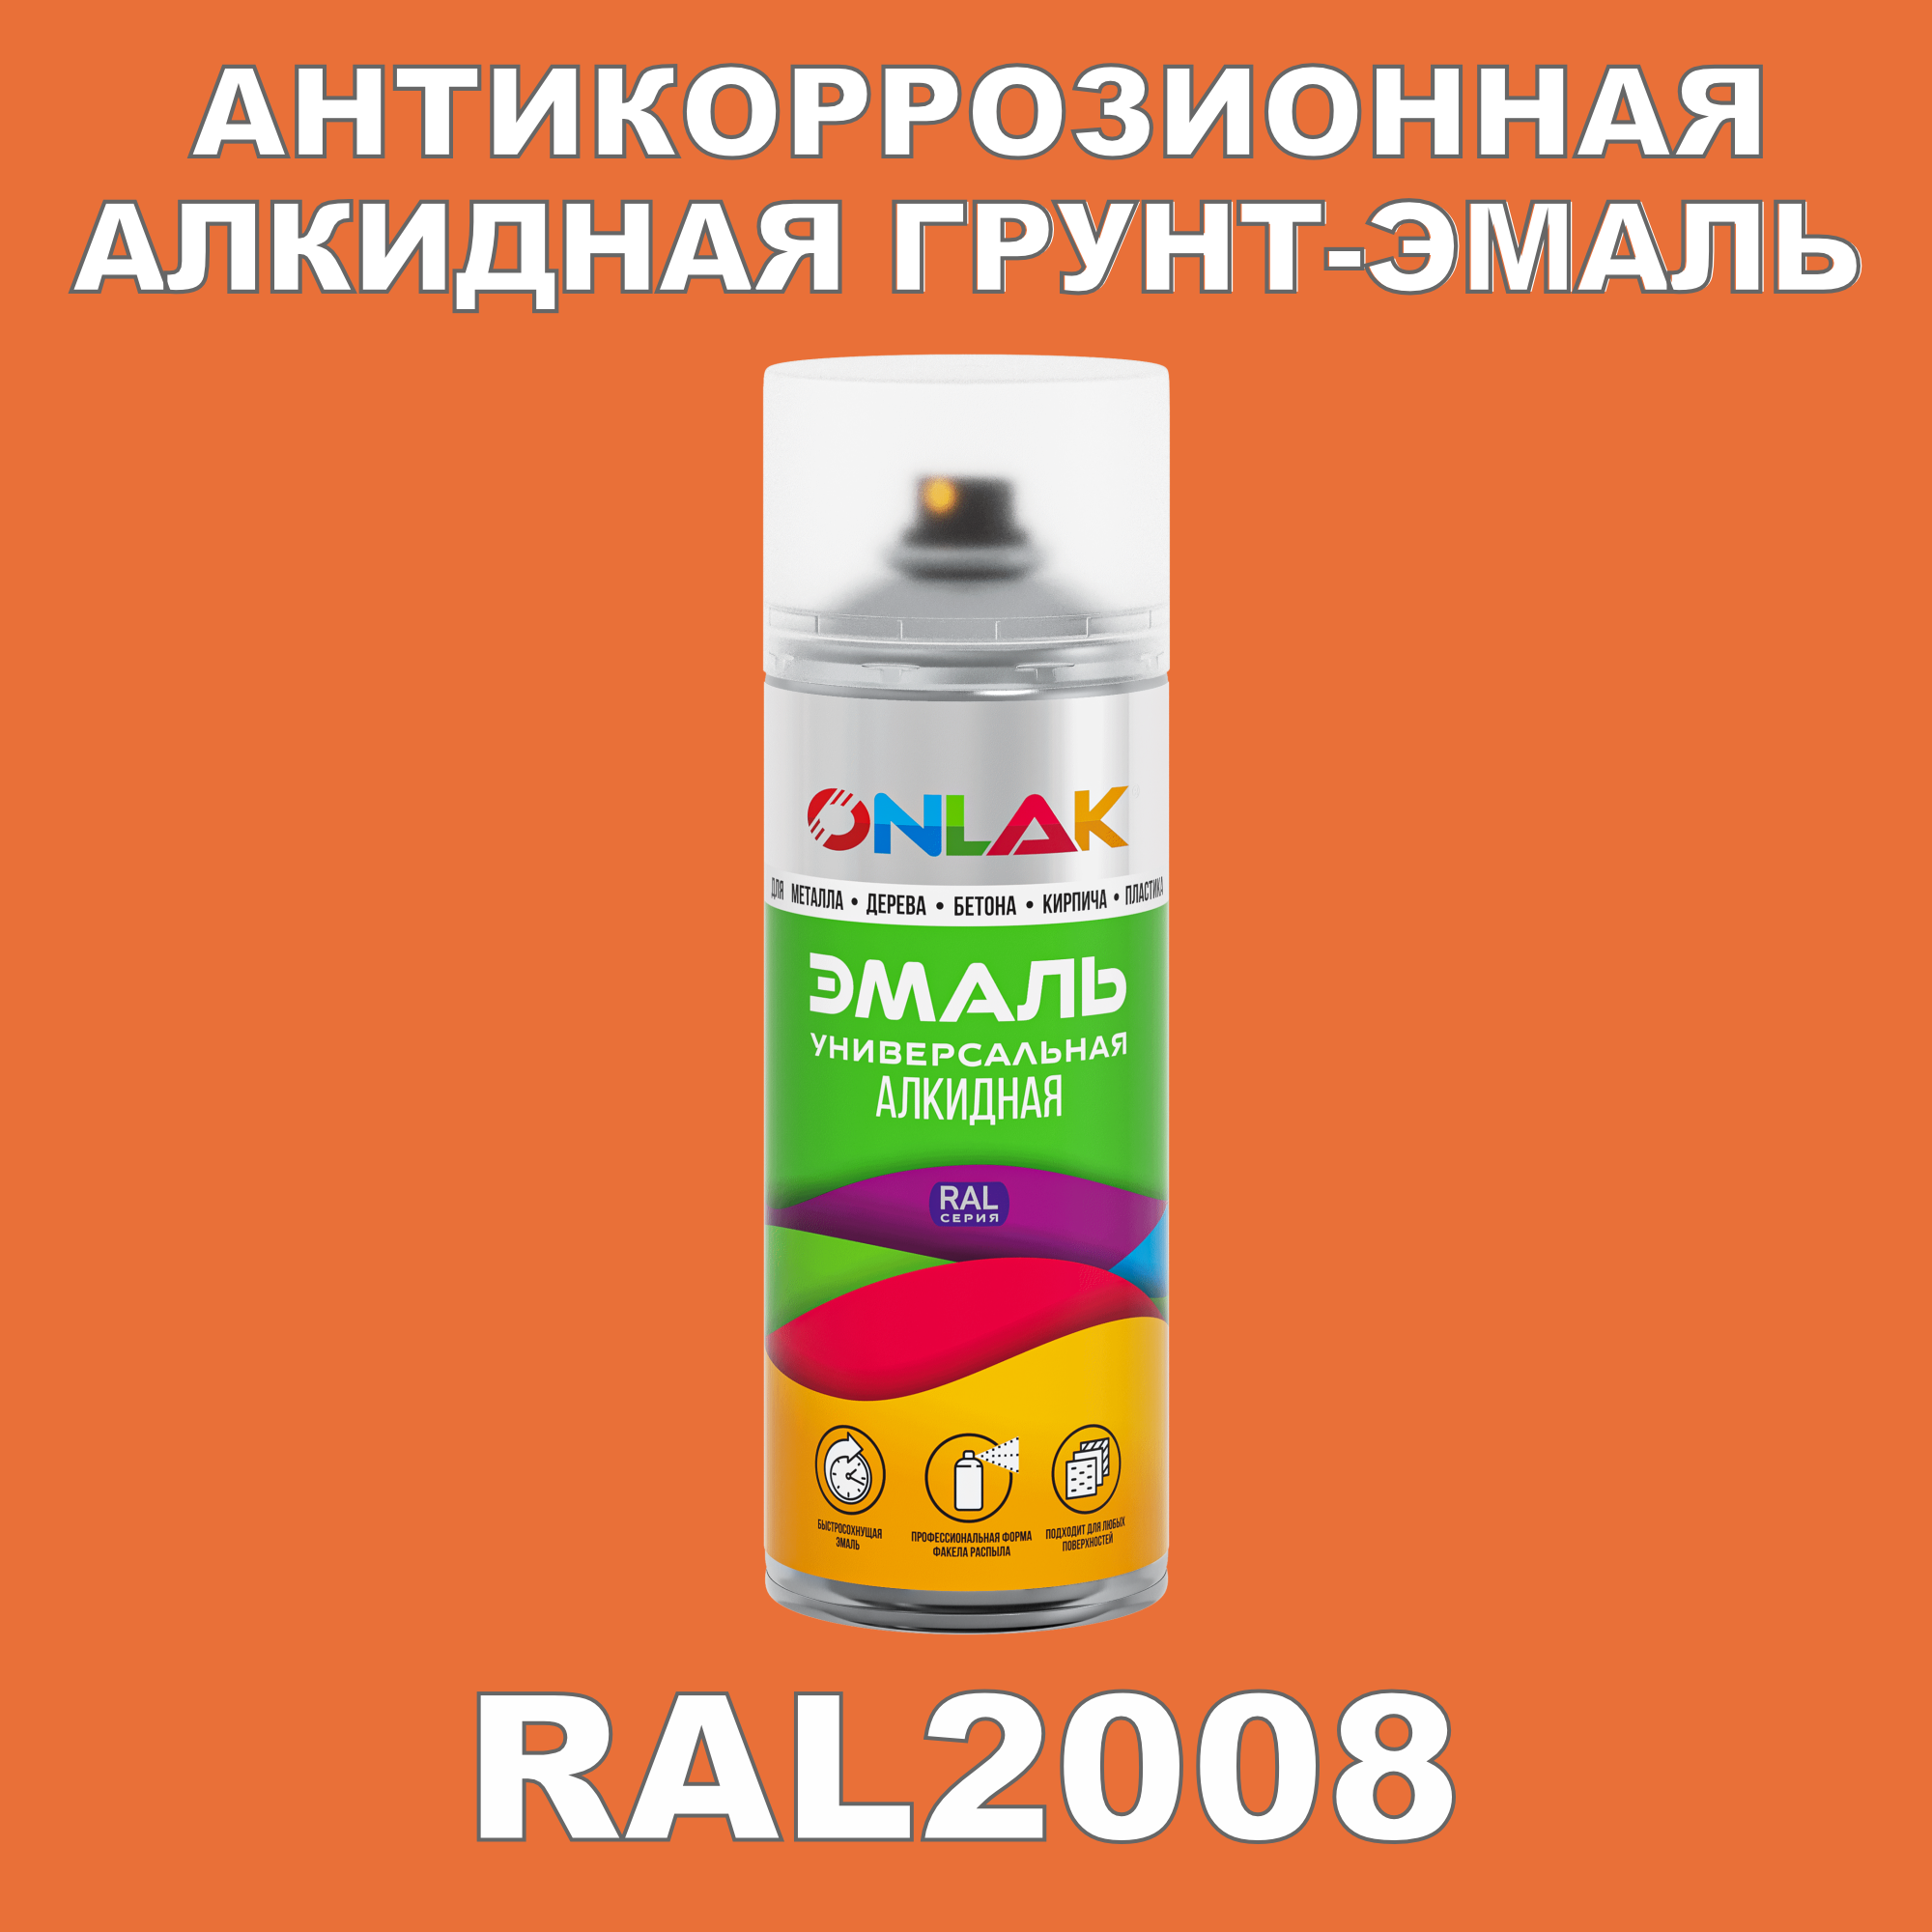 Антикоррозионная грунт-эмаль ONLAK RAL 2008,оранжевый,714 мл